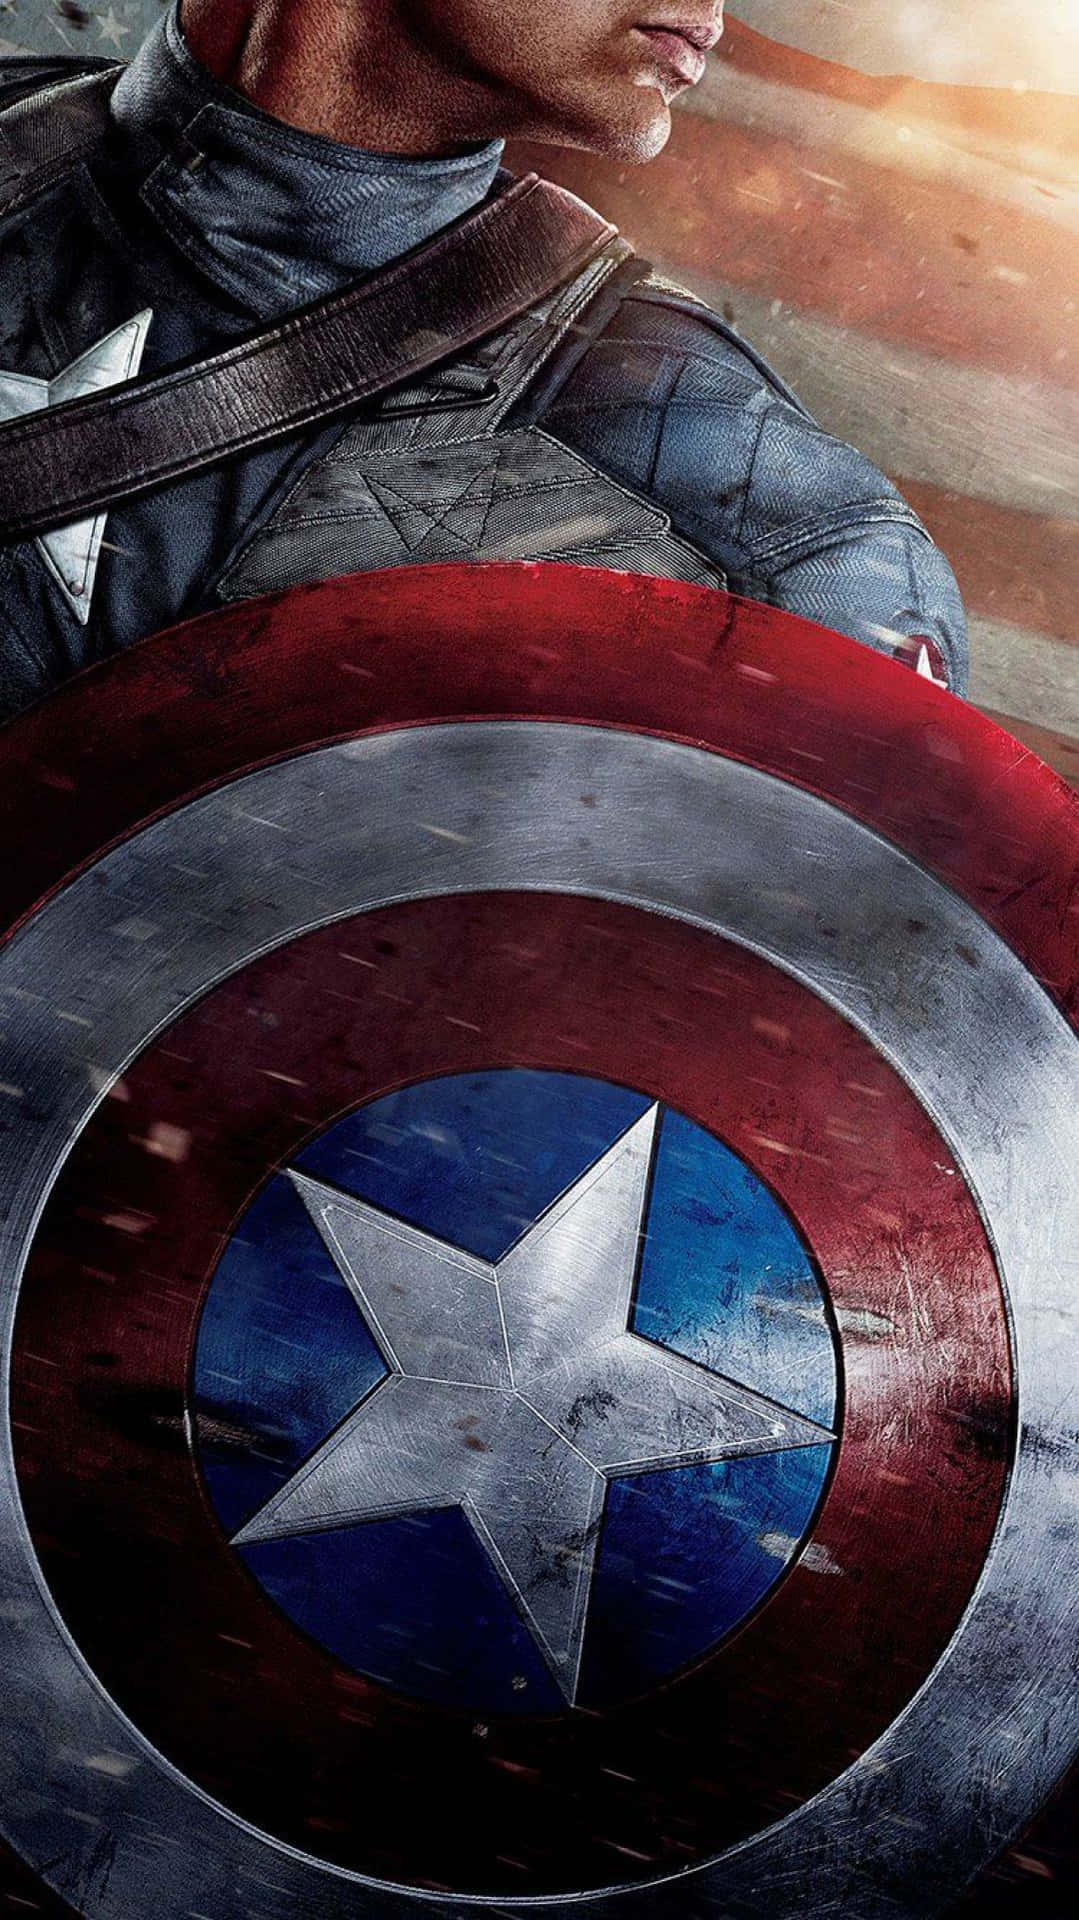 A heroic Captain America